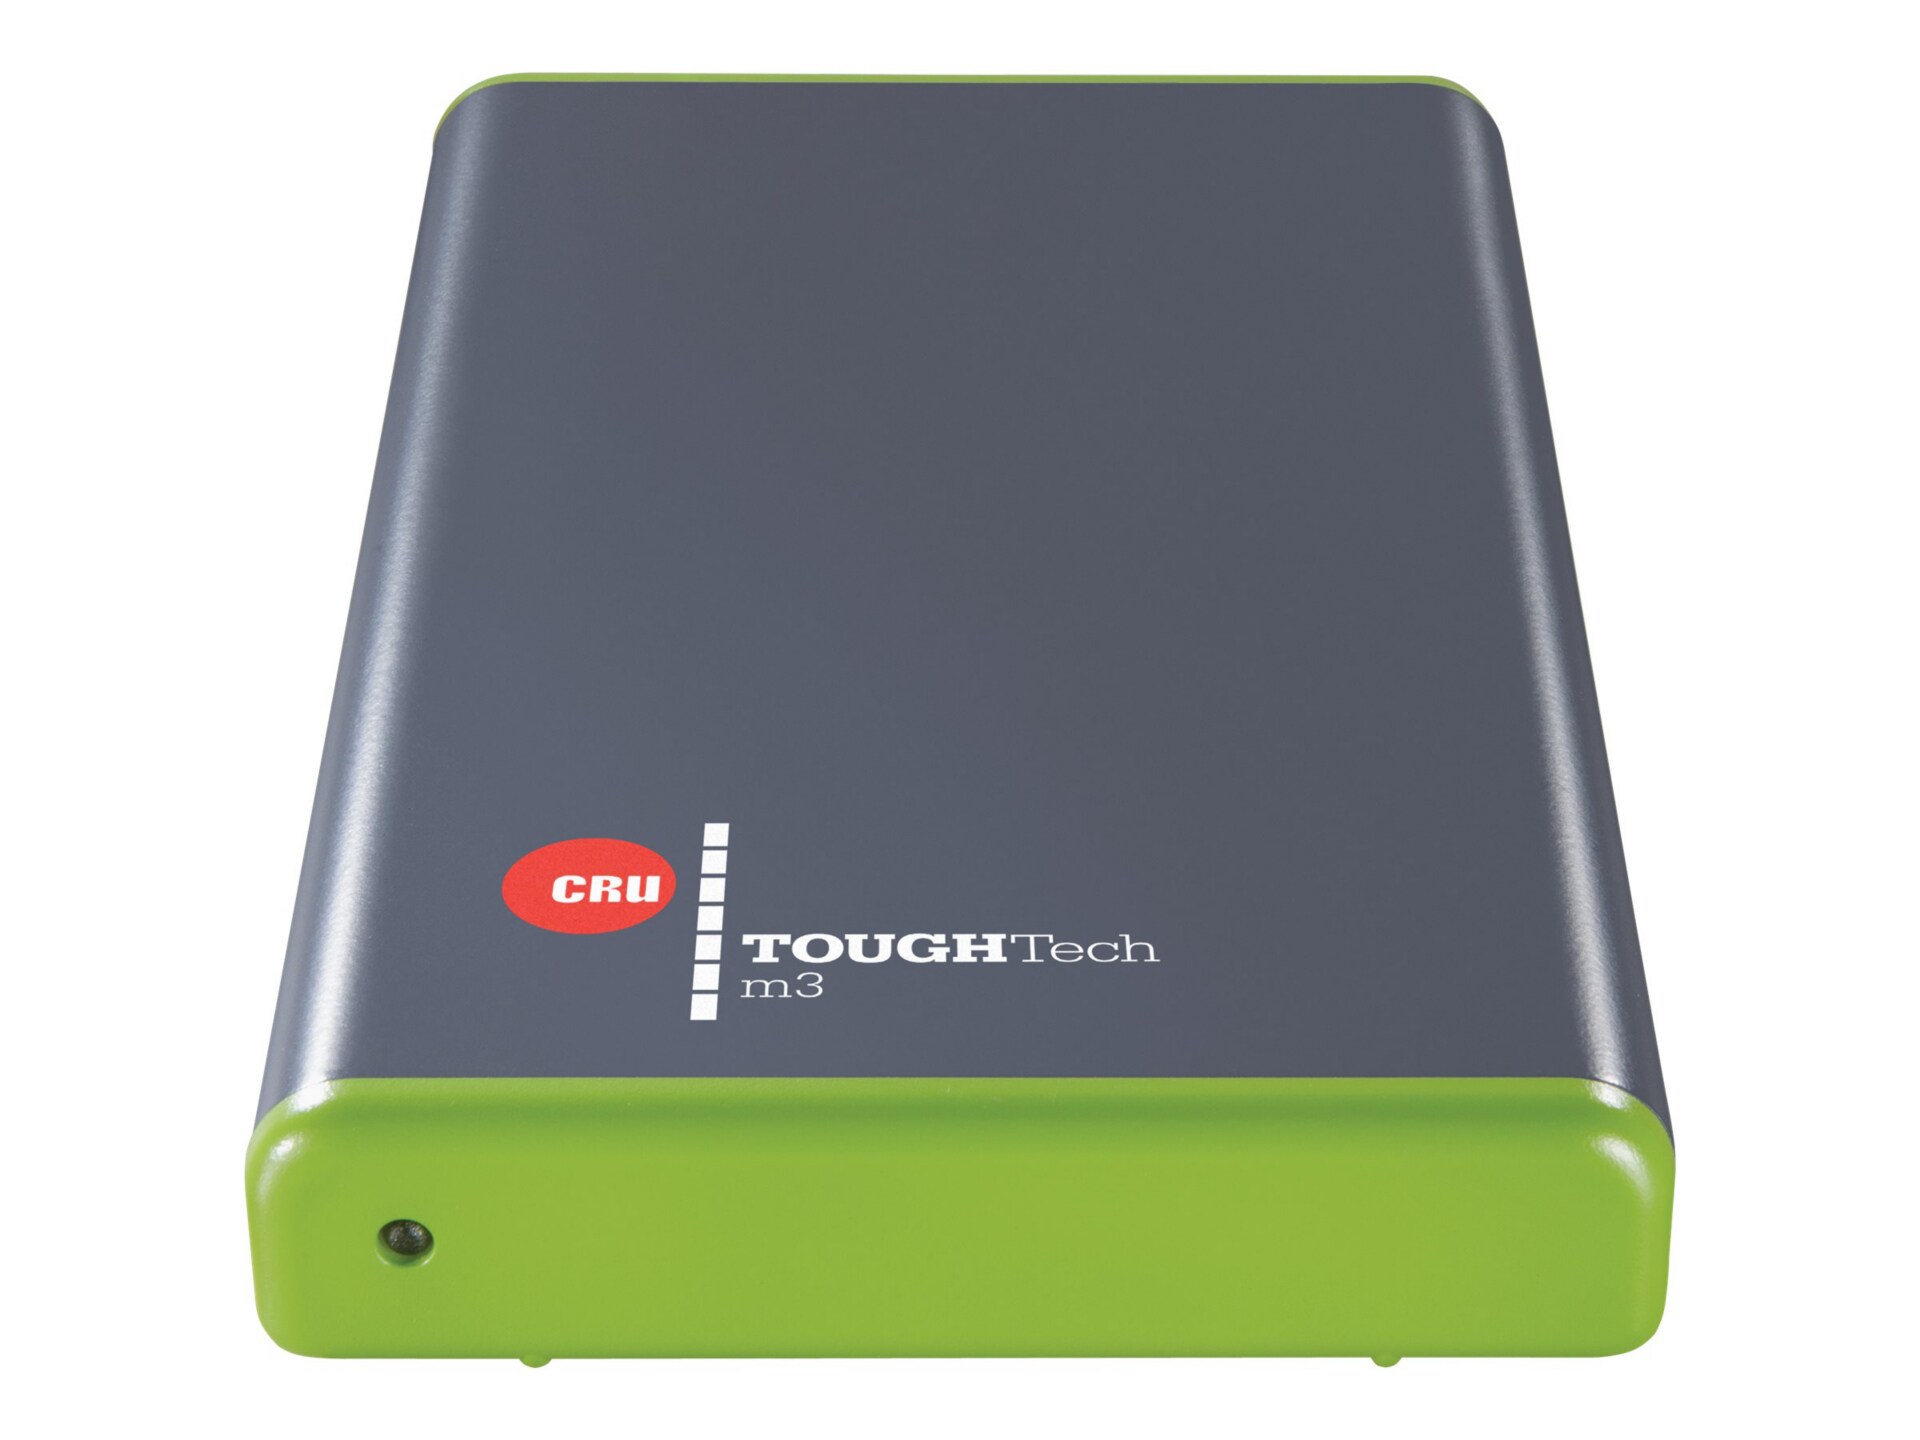 CRU ToughTech M3 - solid state drive - 1 TB - USB 3.0